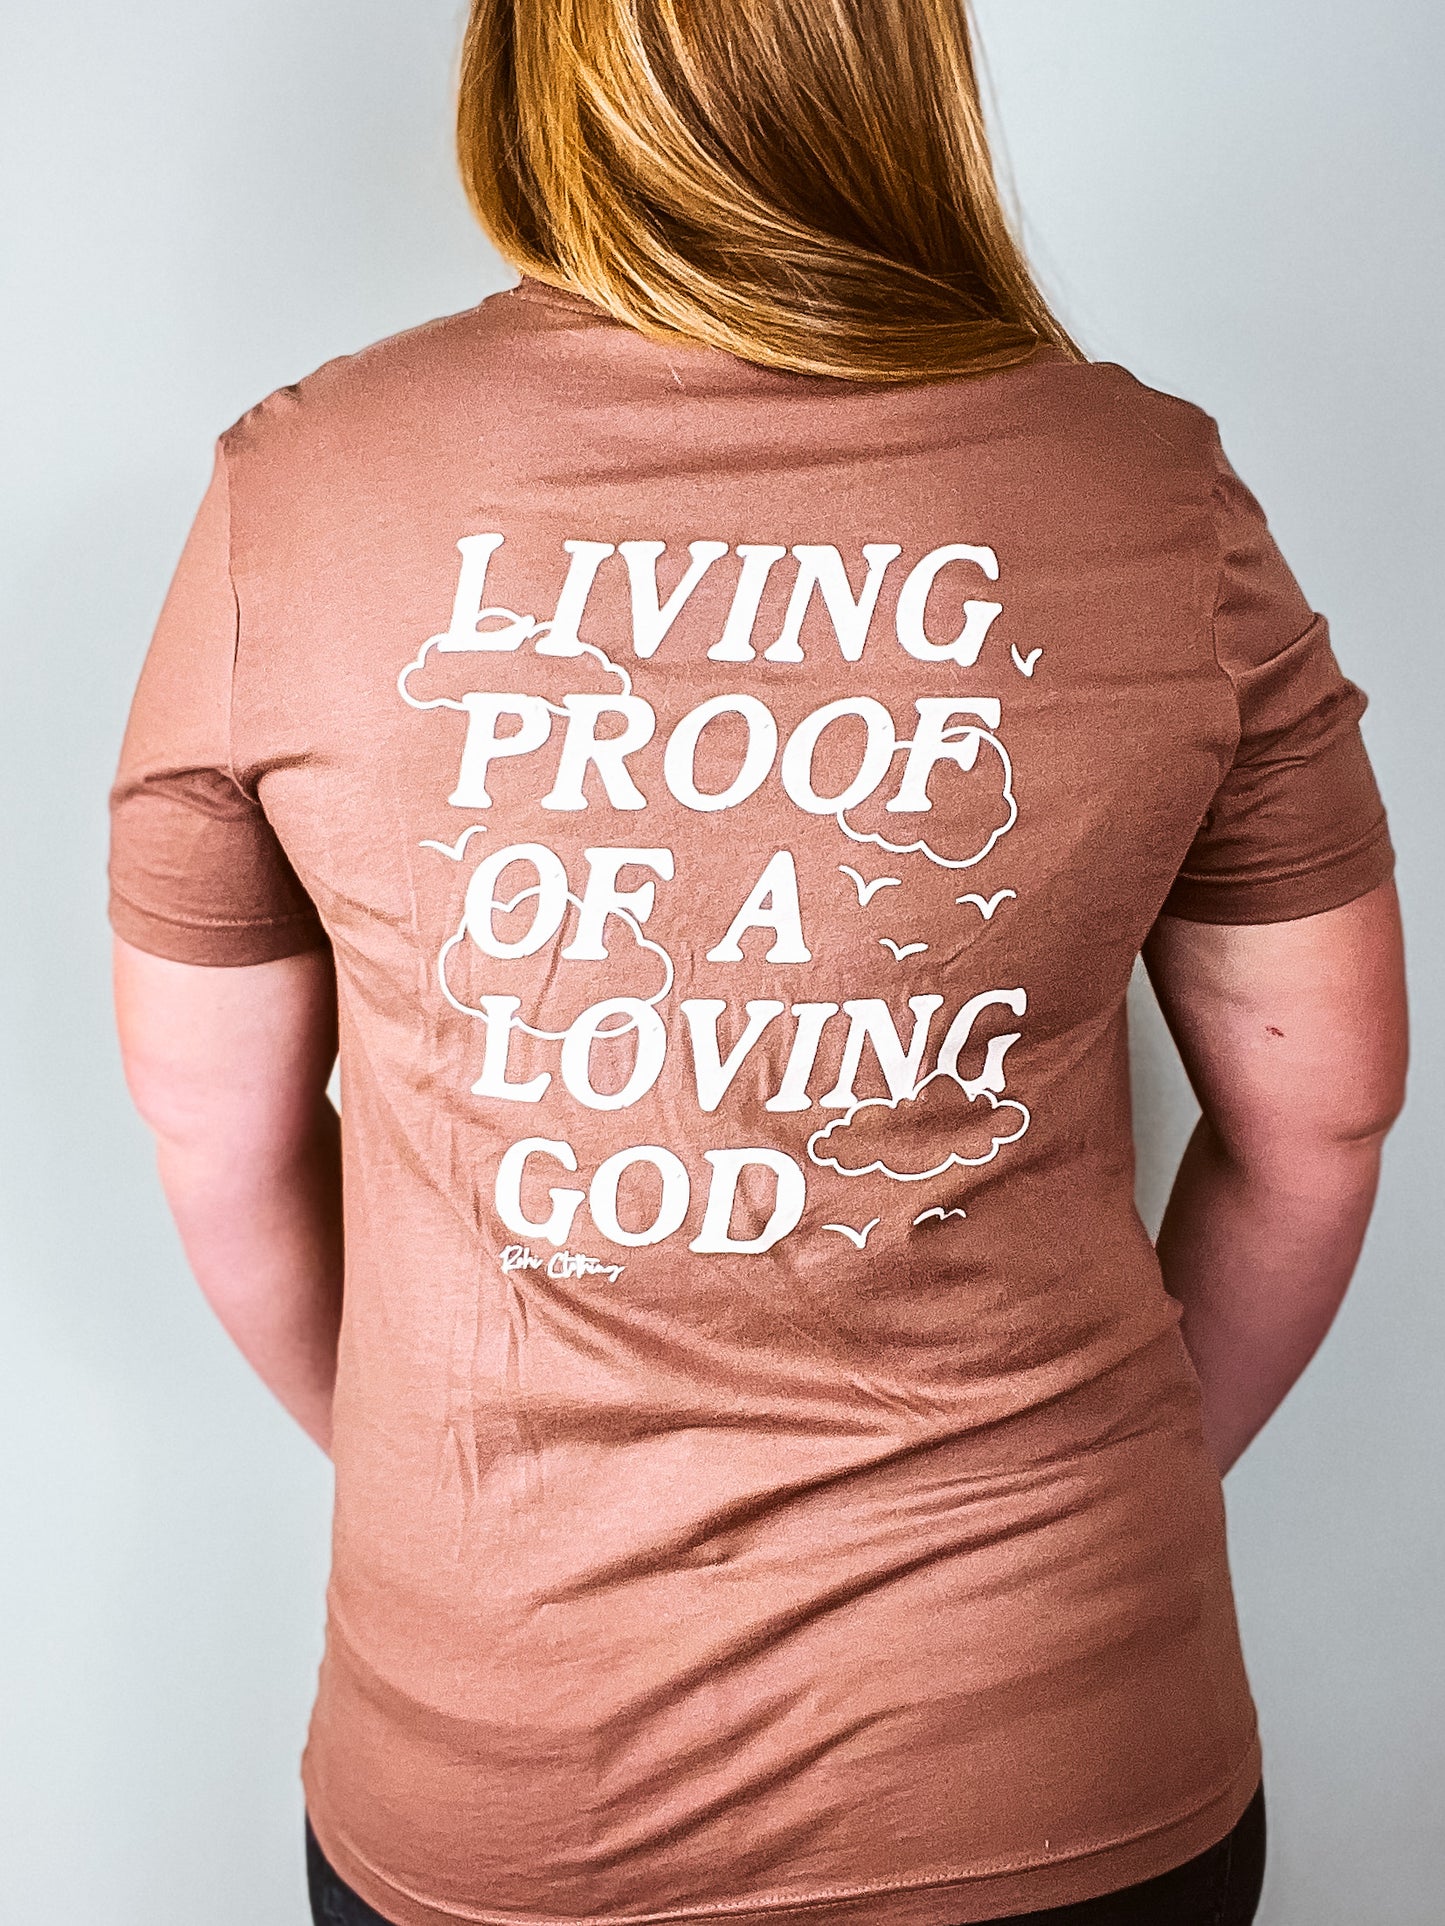 Living Proof of a Loving God Faith based Tee